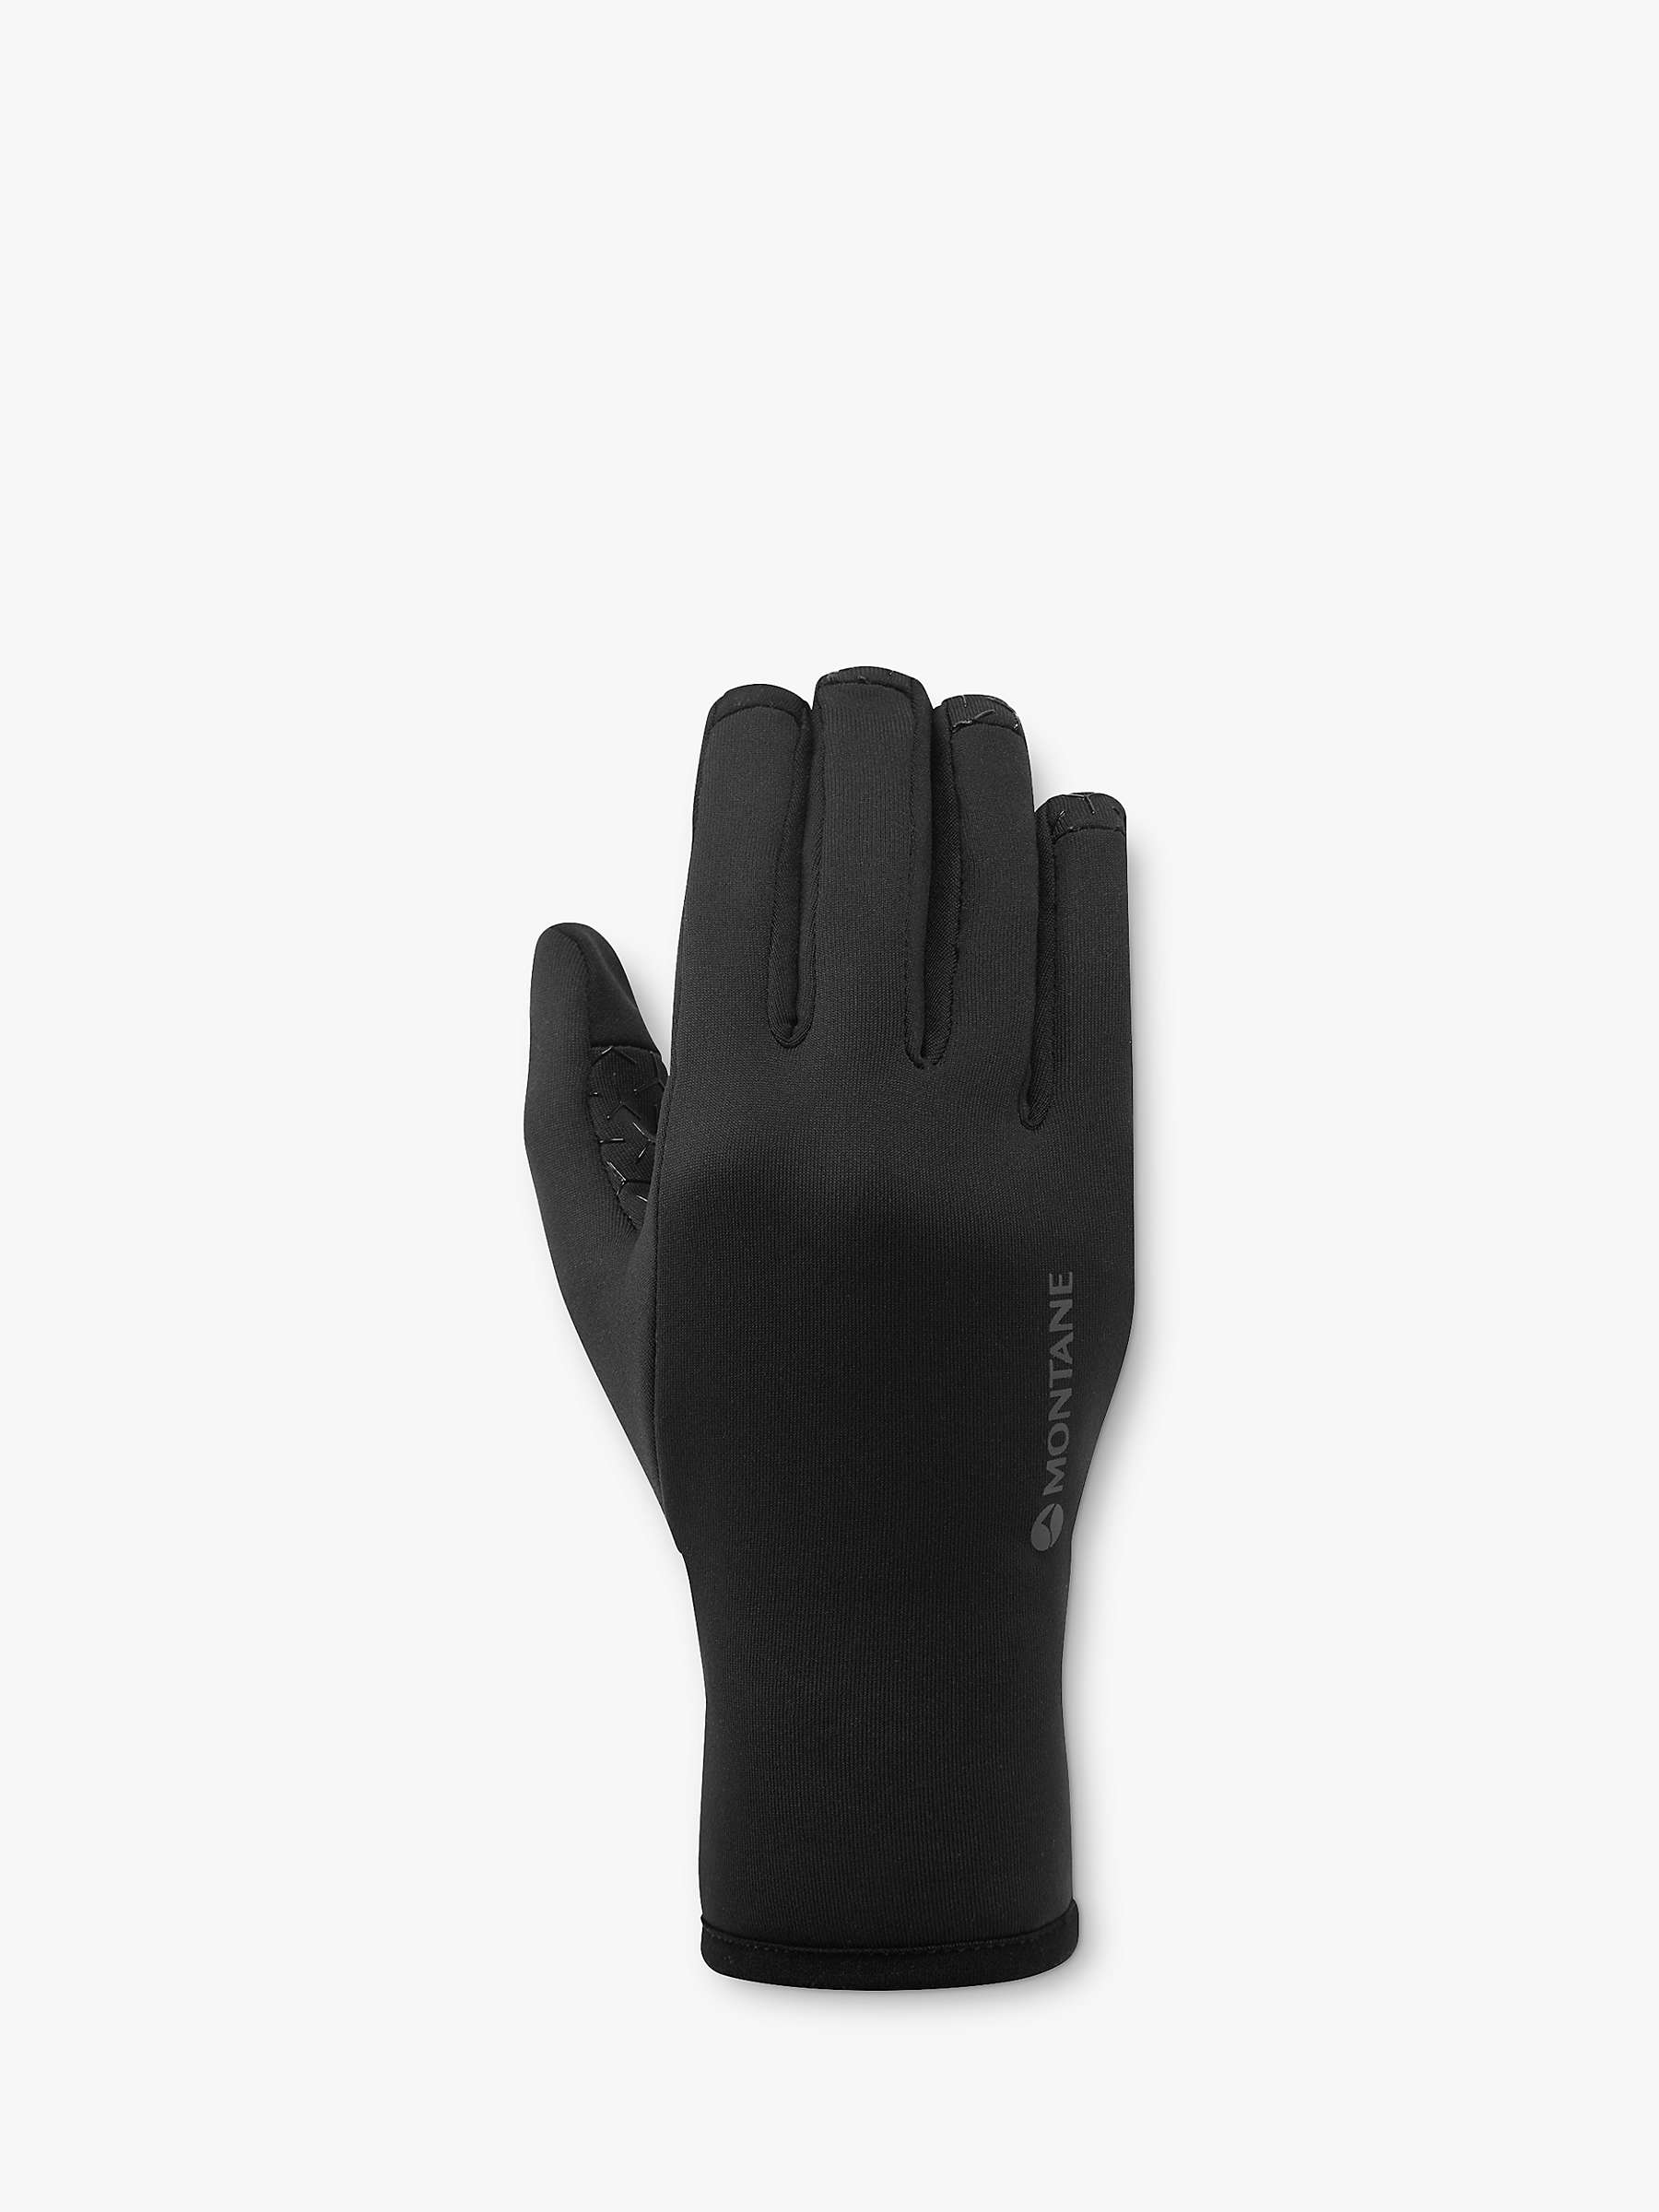 Buy Montane Men's Fury XT Stretch Gloves, Black Online at johnlewis.com